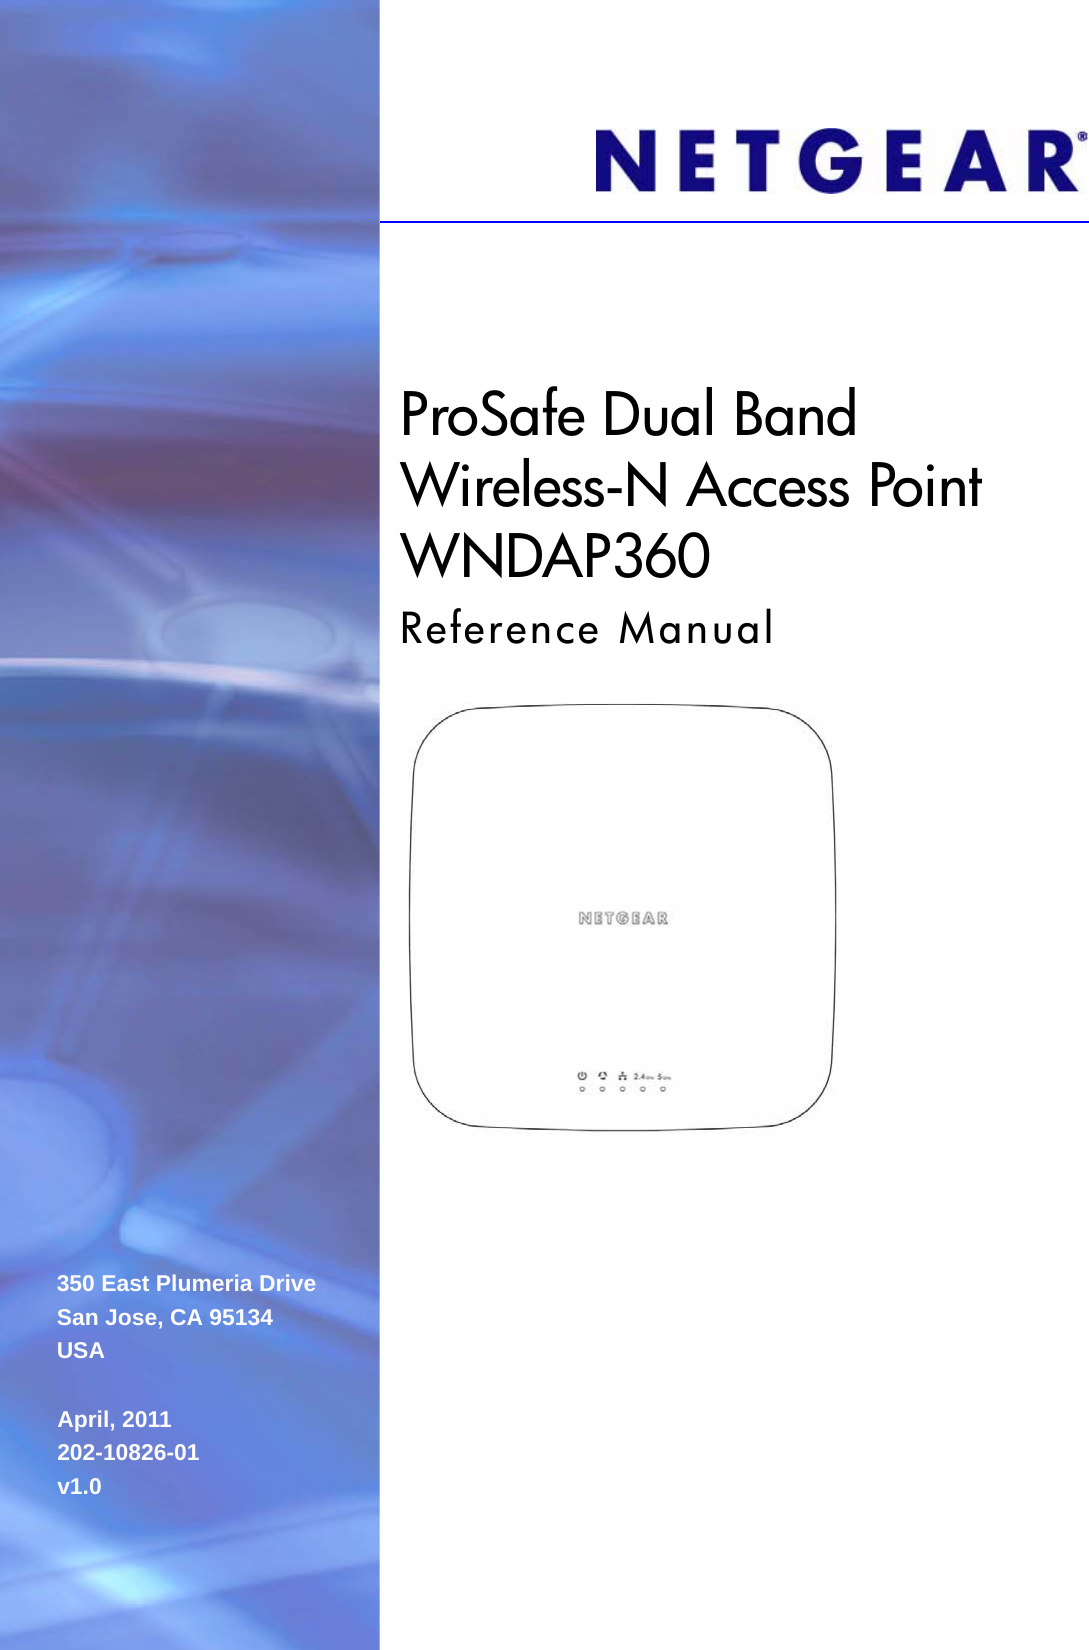 350 East Plumeria DriveSan Jose, CA 95134USAApril, 2011202-10826-01v1.0ProSafe Dual Band Wireless-N Access Point WNDAP360Reference Manual